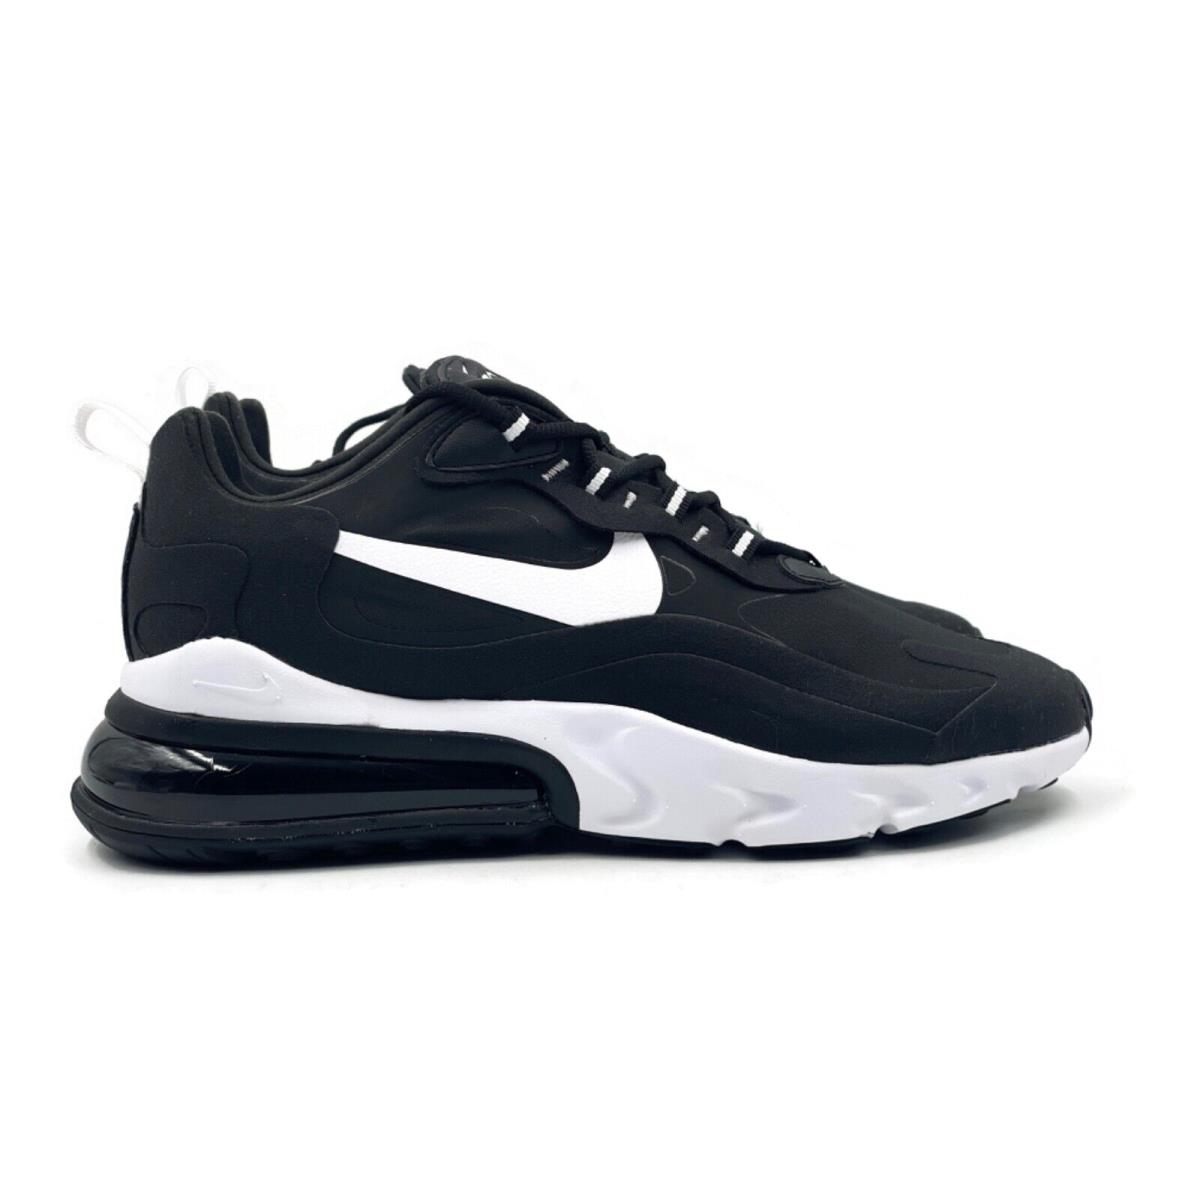 Nike Air Max 270 React Men Casual Running Shoe Black White Athletic Sneaker